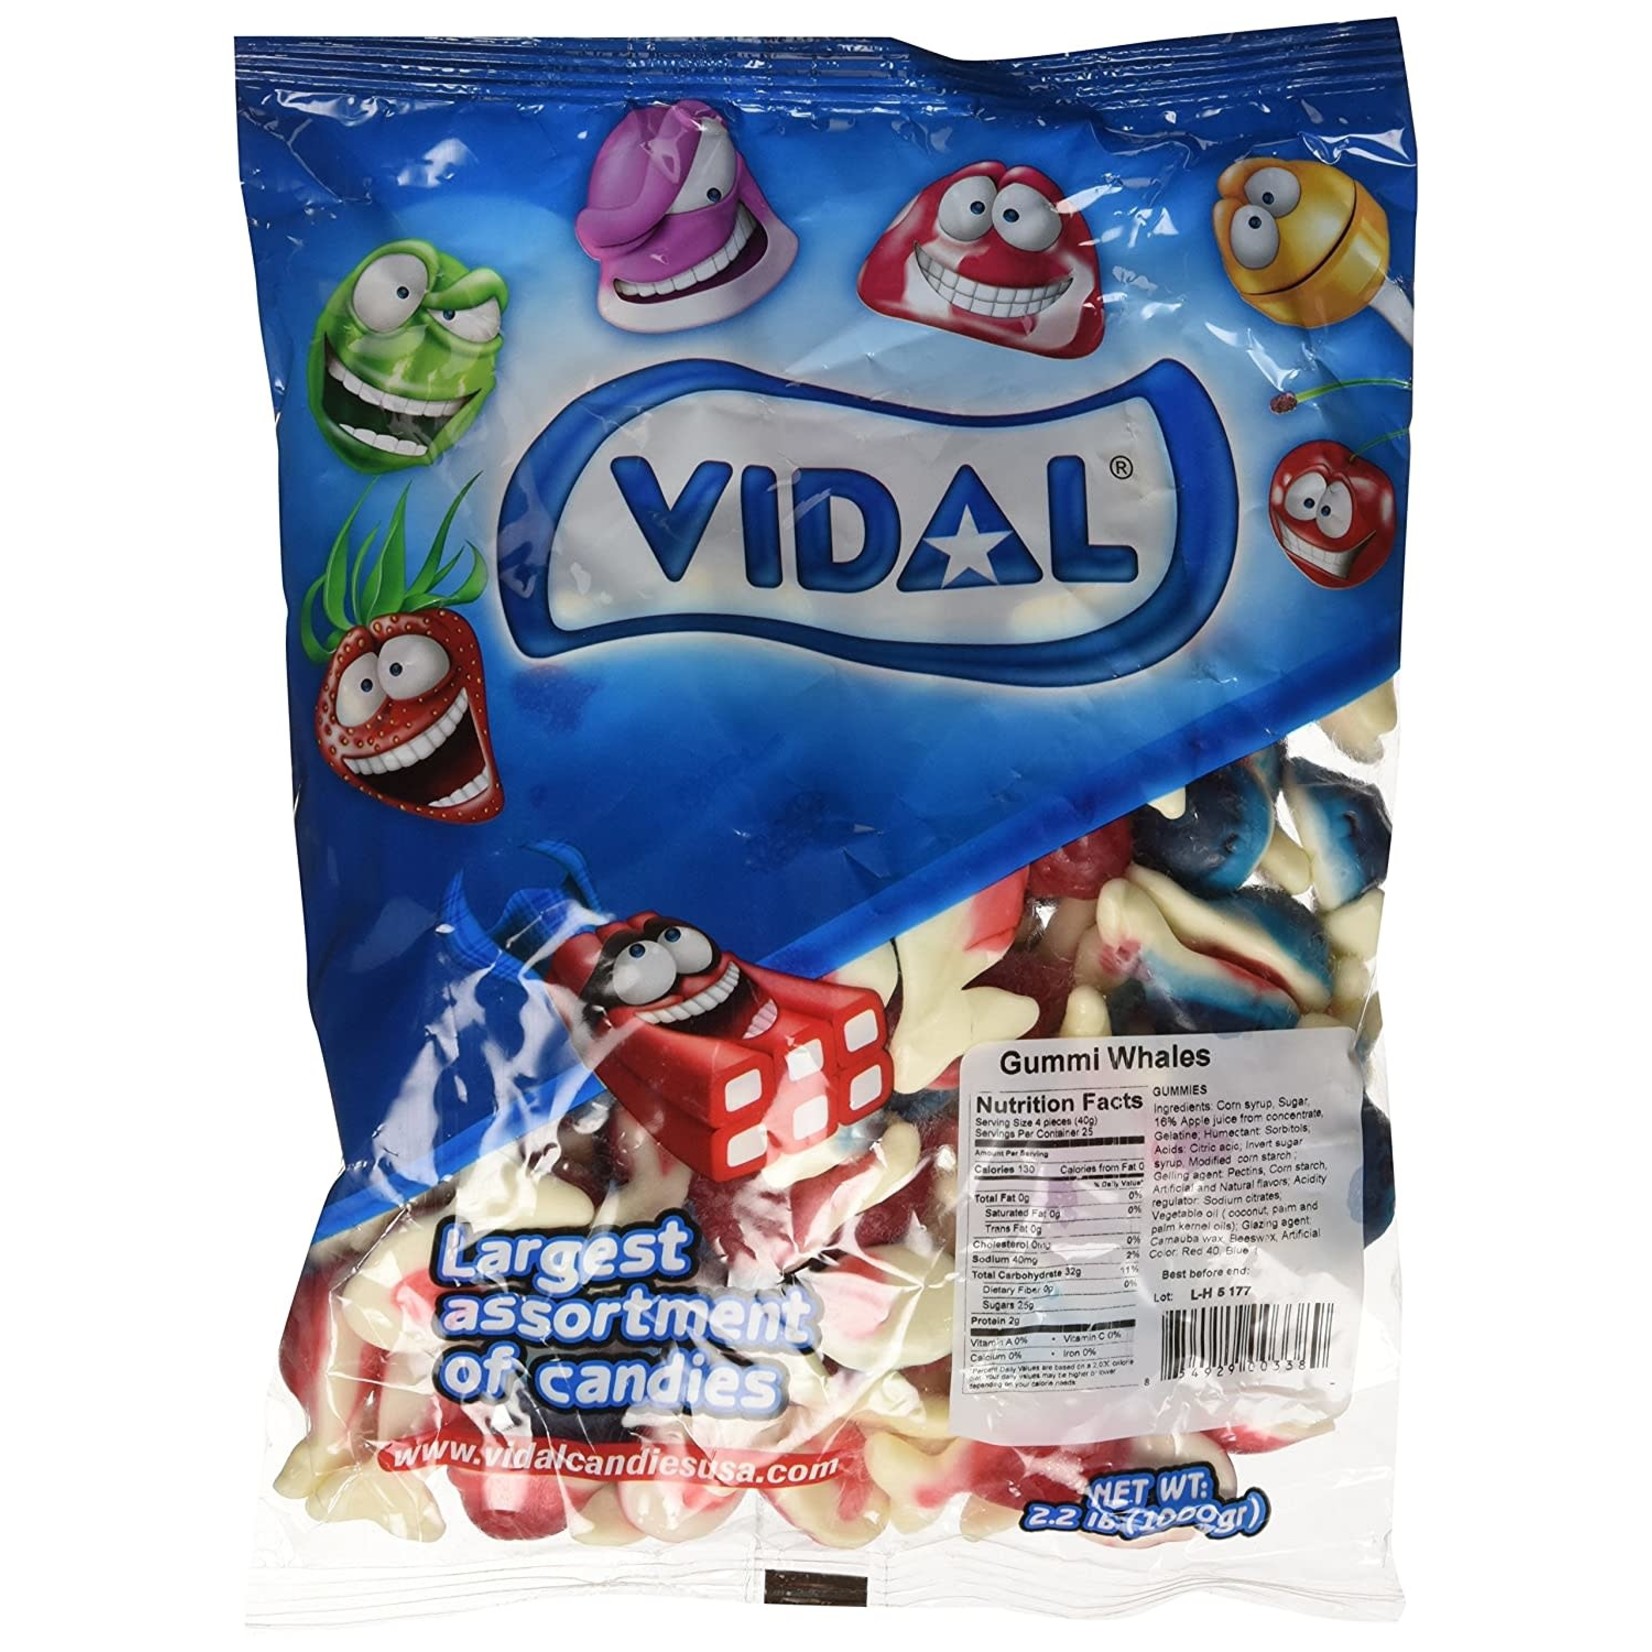 Vidal Gummi Whales 2.2lb